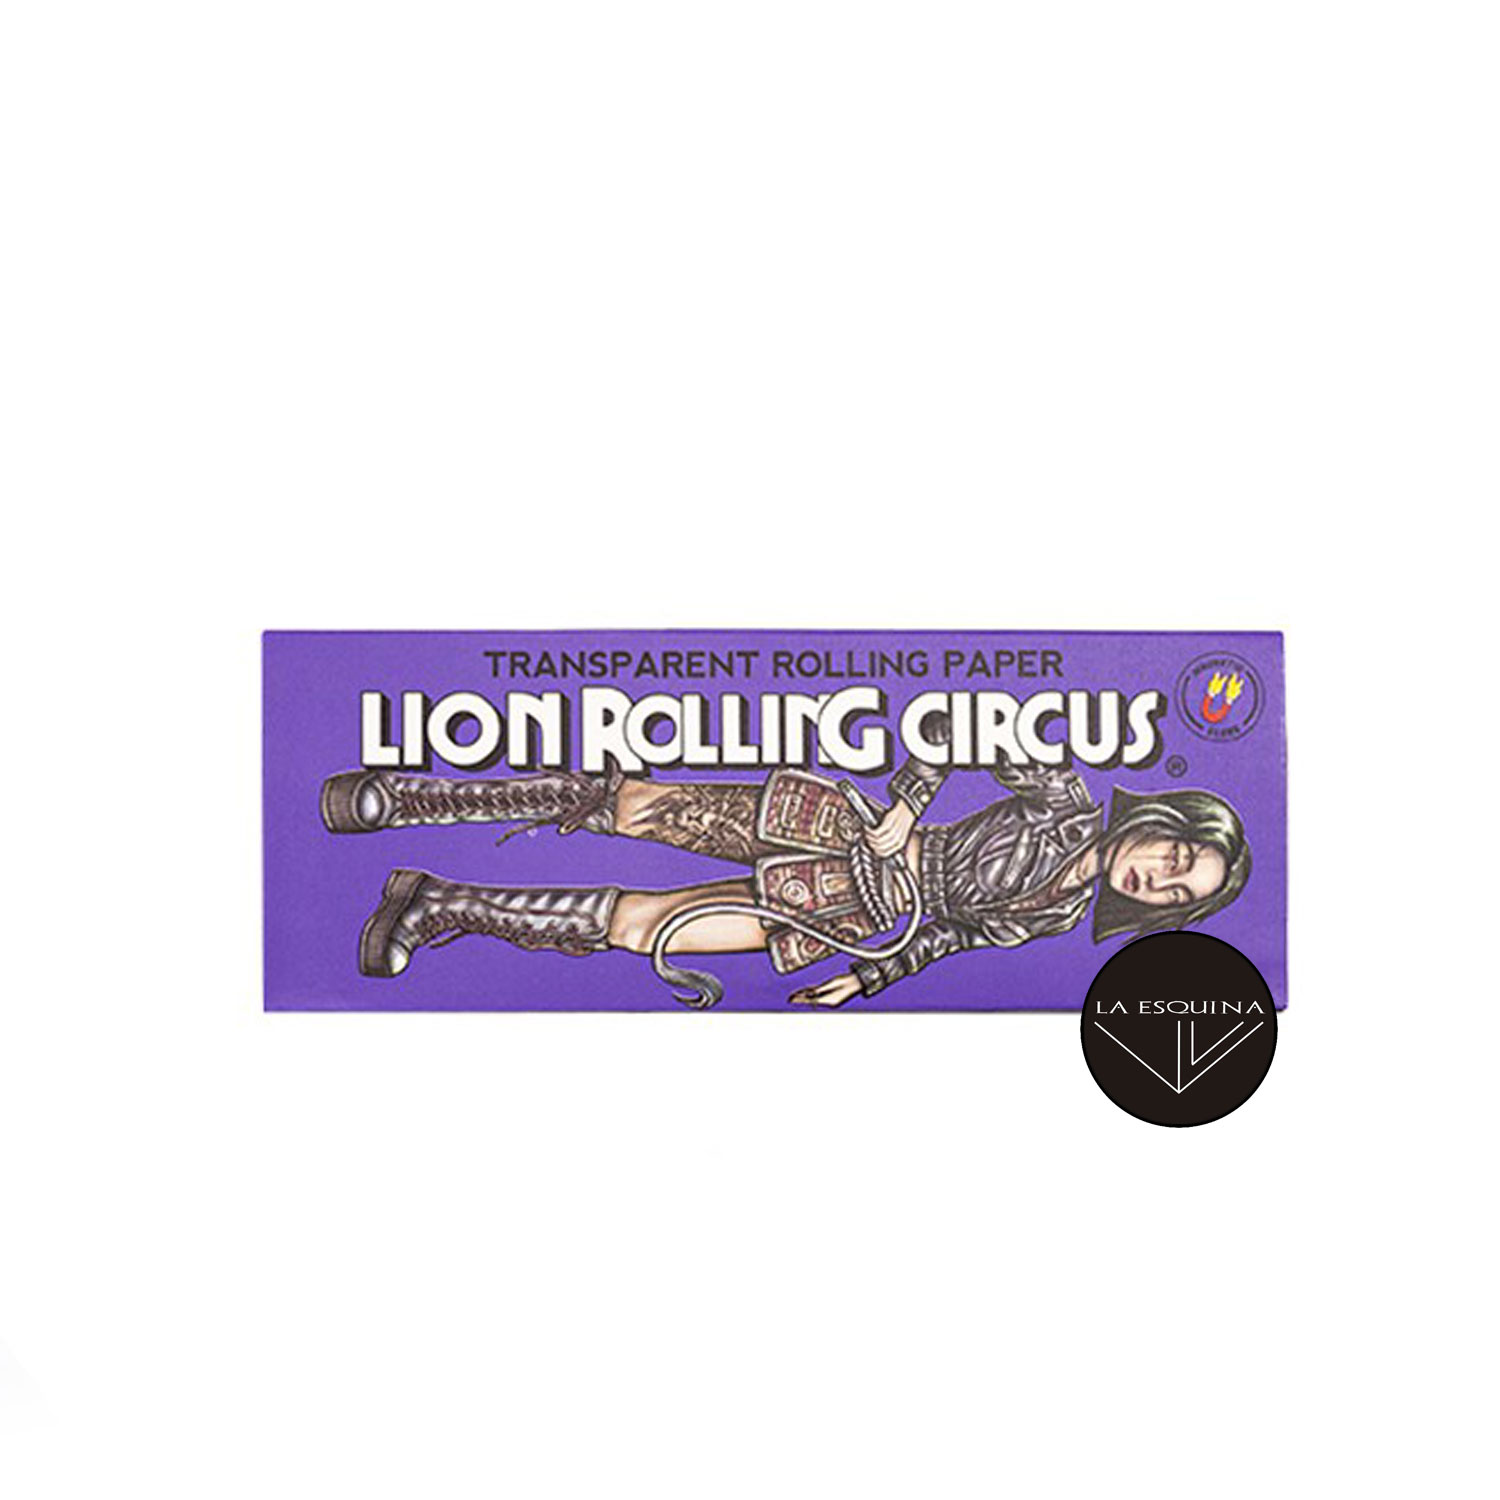 Maquina de liar de Lion Rolling Circus